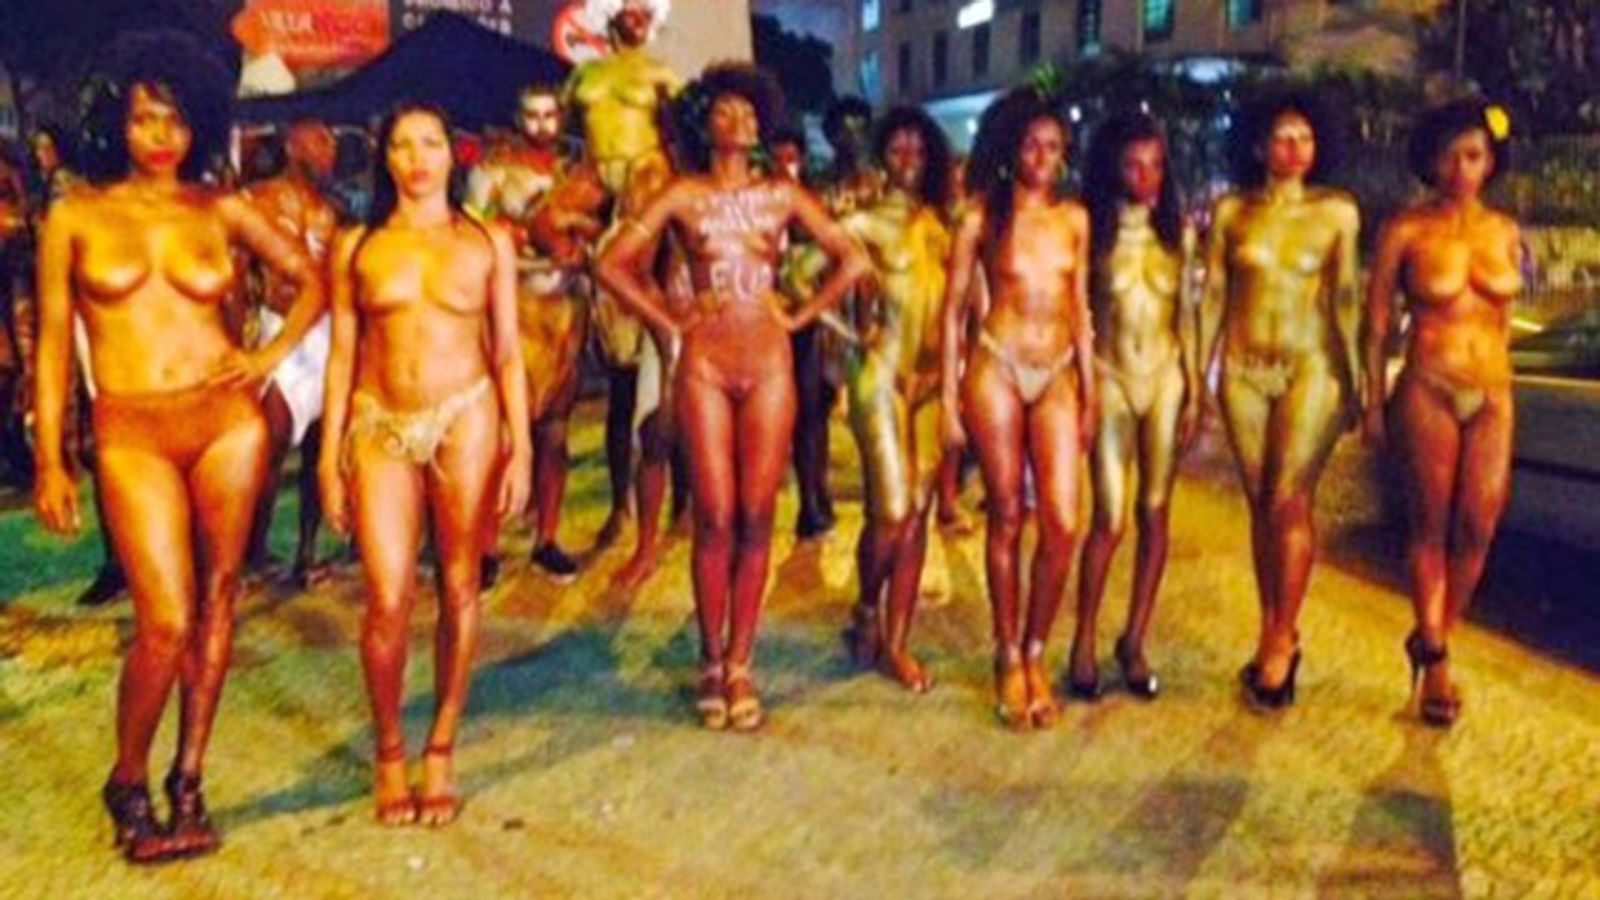 President Obama To Face 5,000 Naked Protesters in Kenya